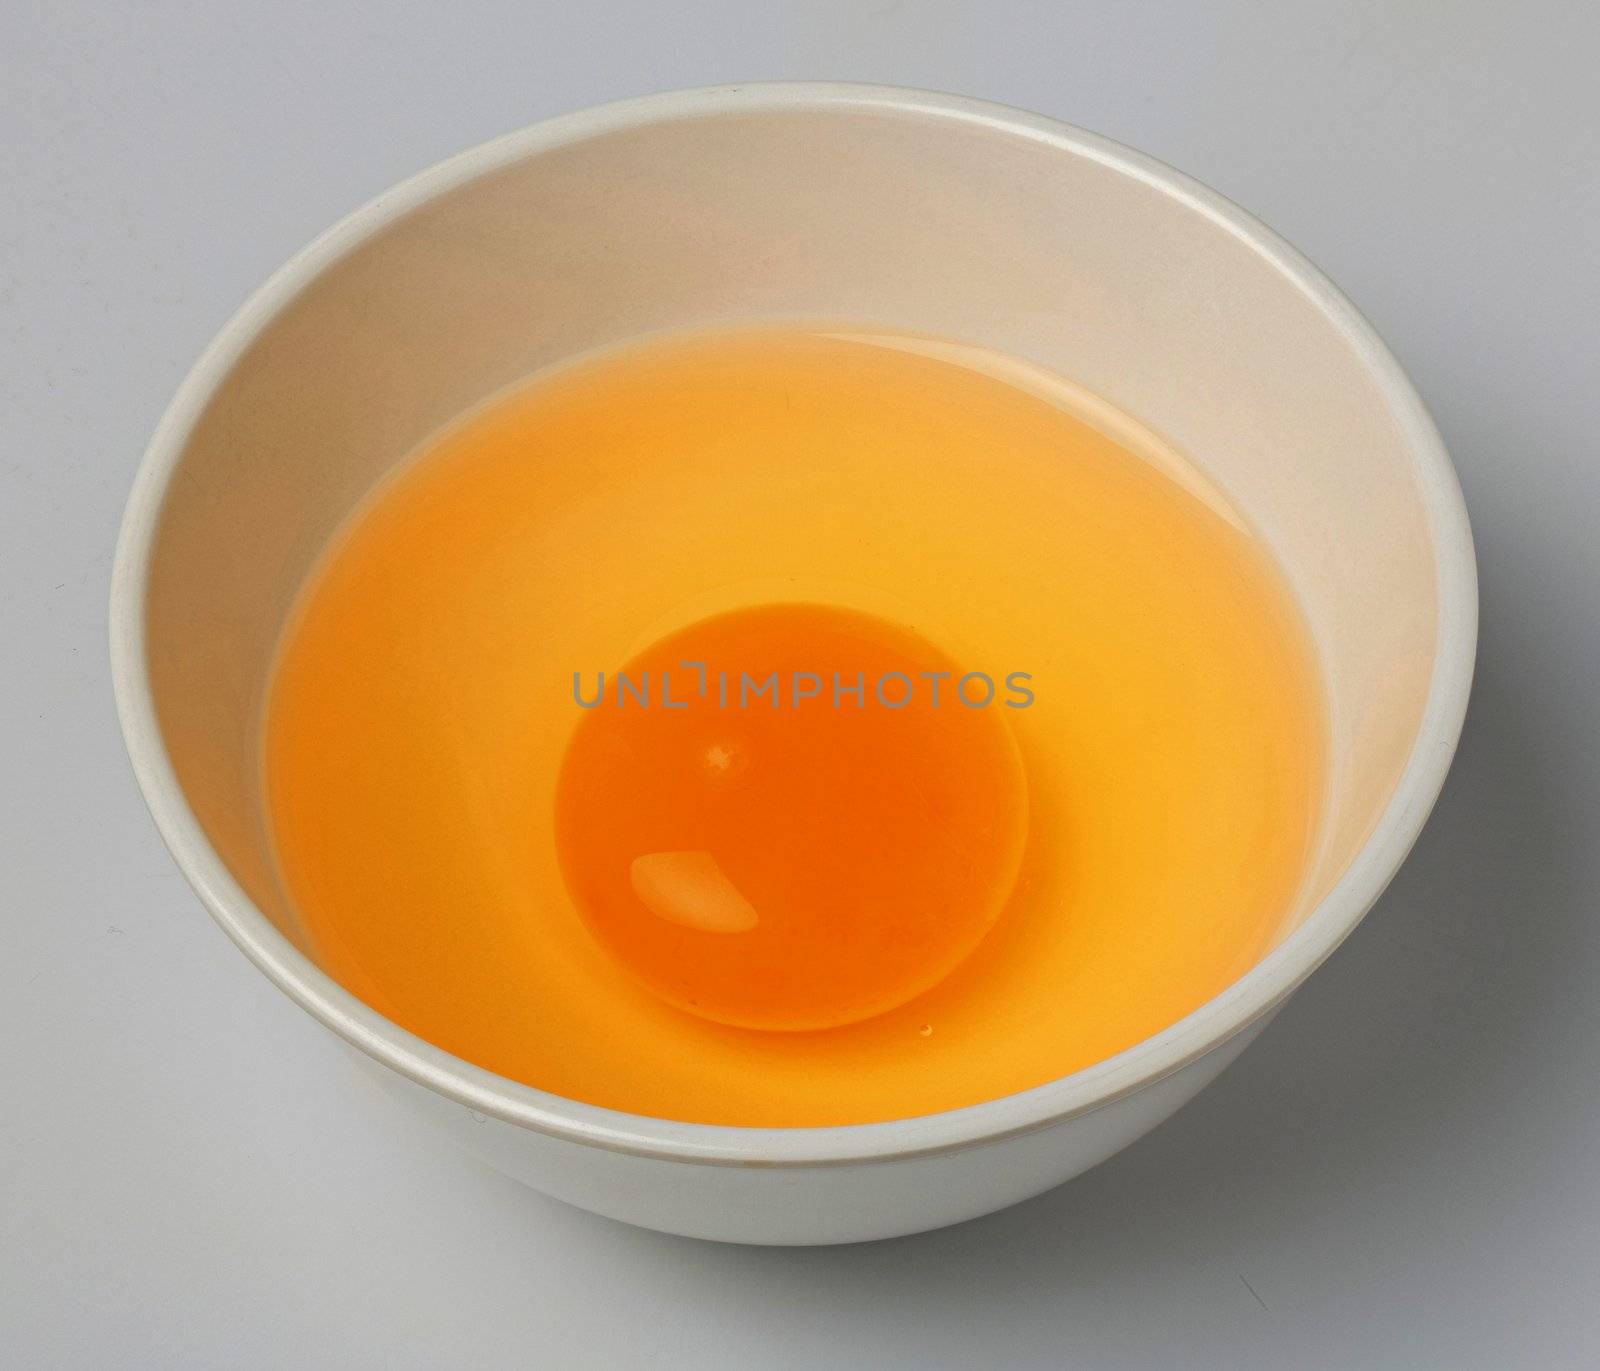 Chicken egg yolk in white small bowl